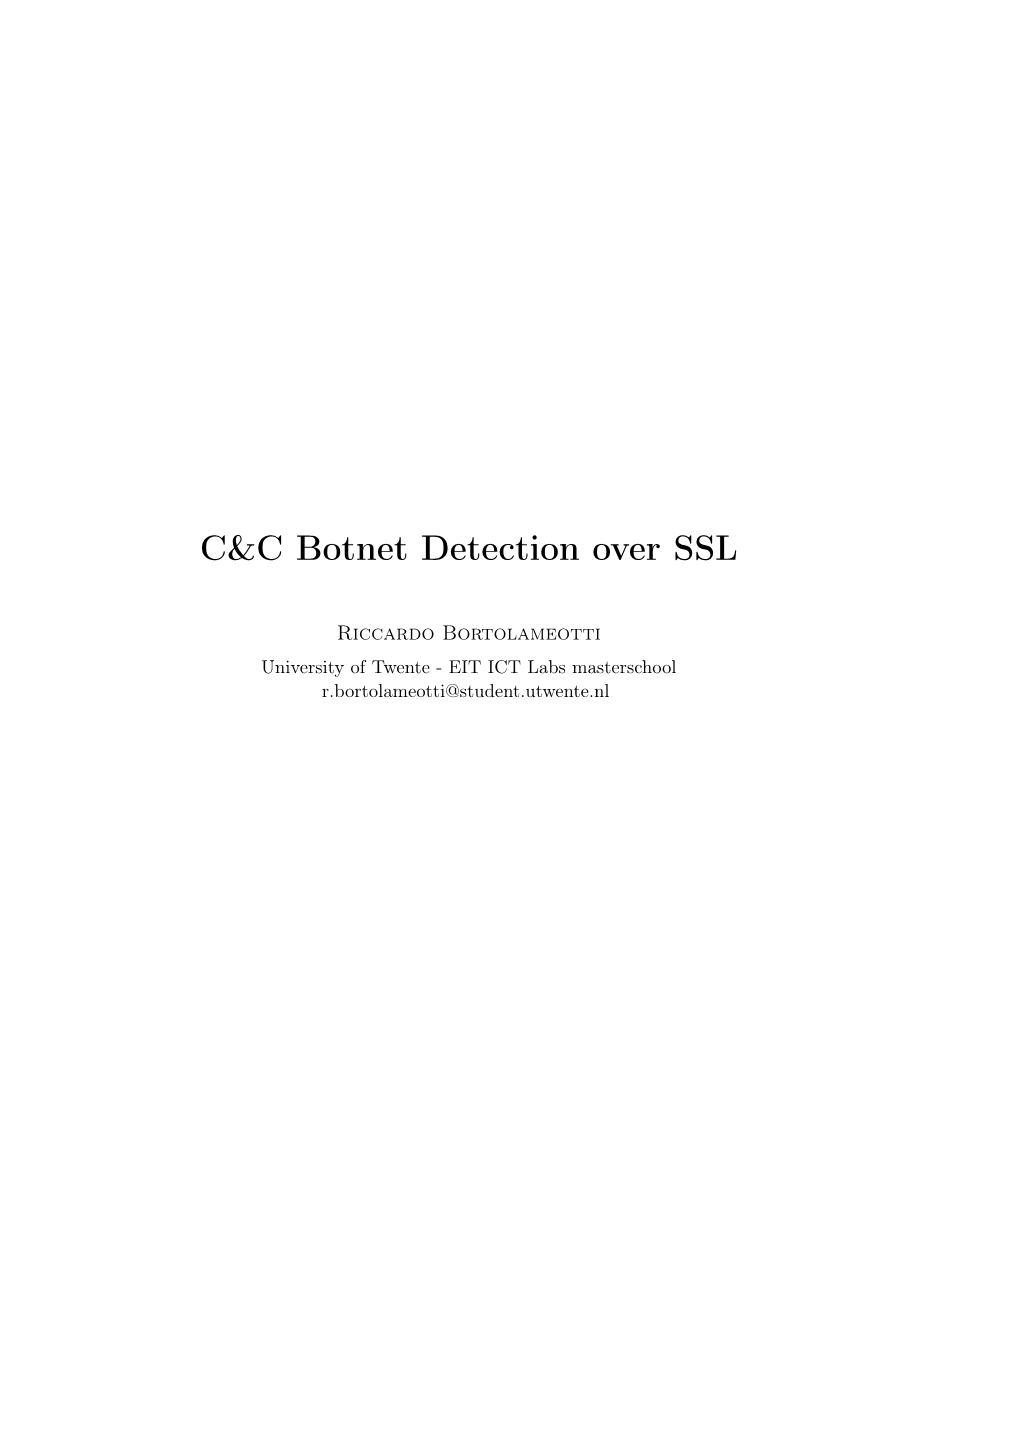 C&C Botnet Detection Over